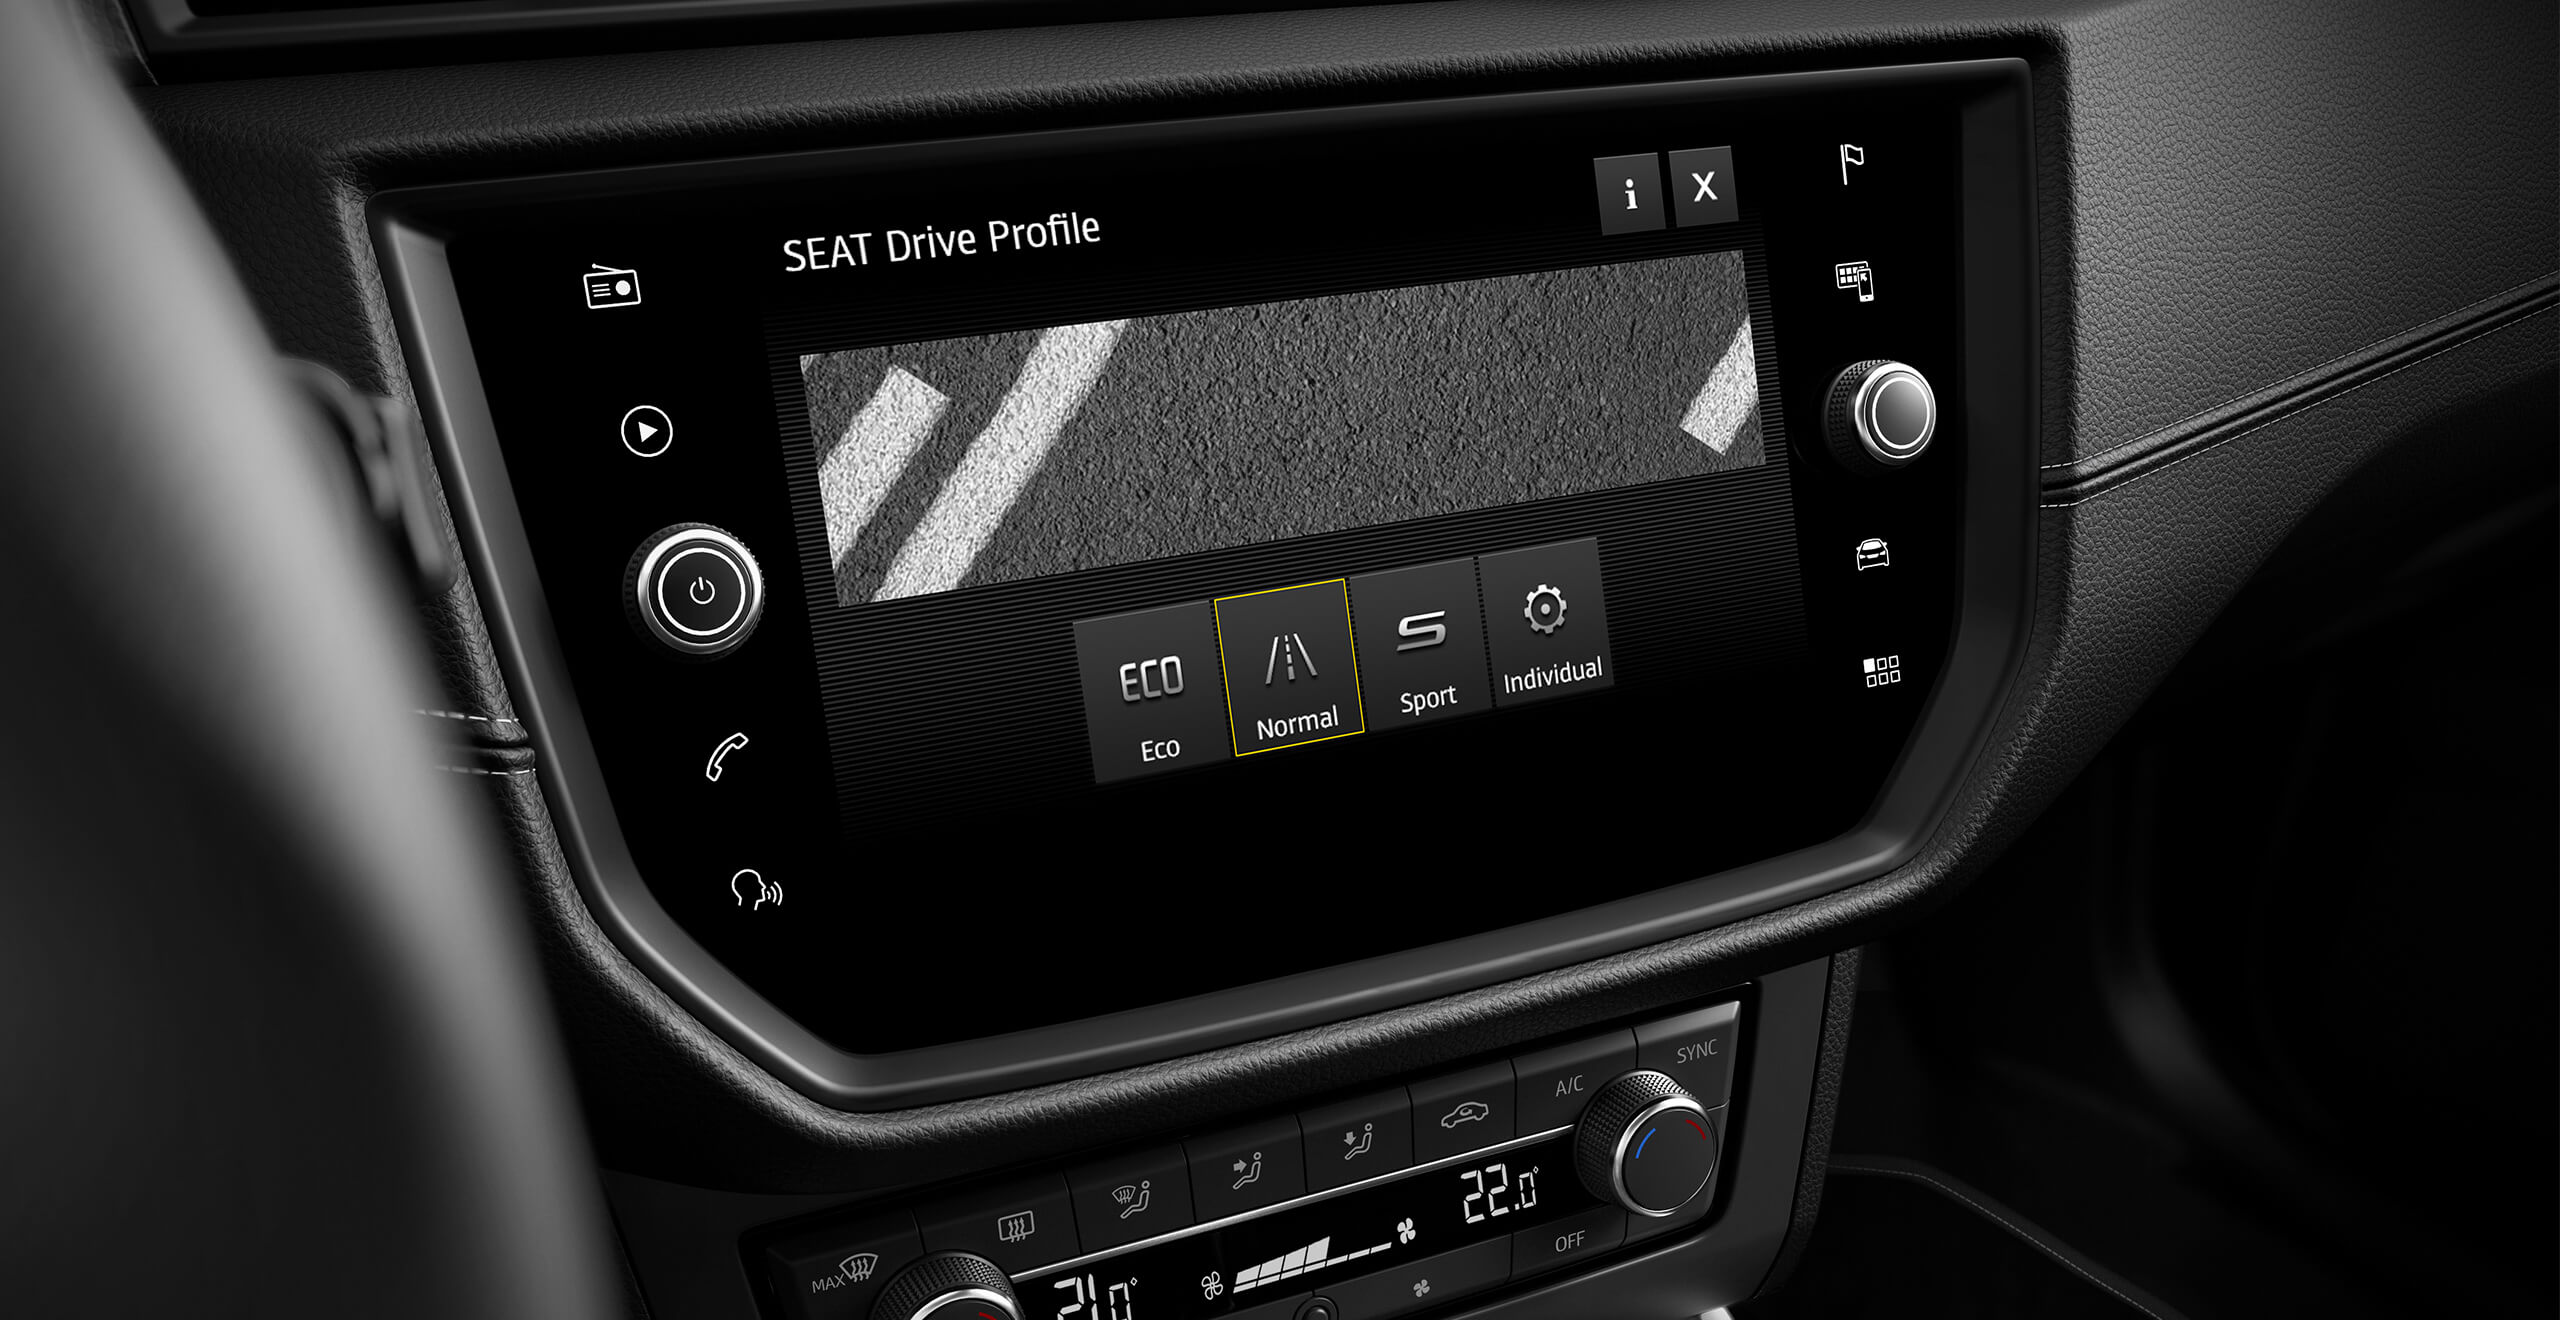 SEAT Arona - Ecran SEAT Drive Profile mode Normal